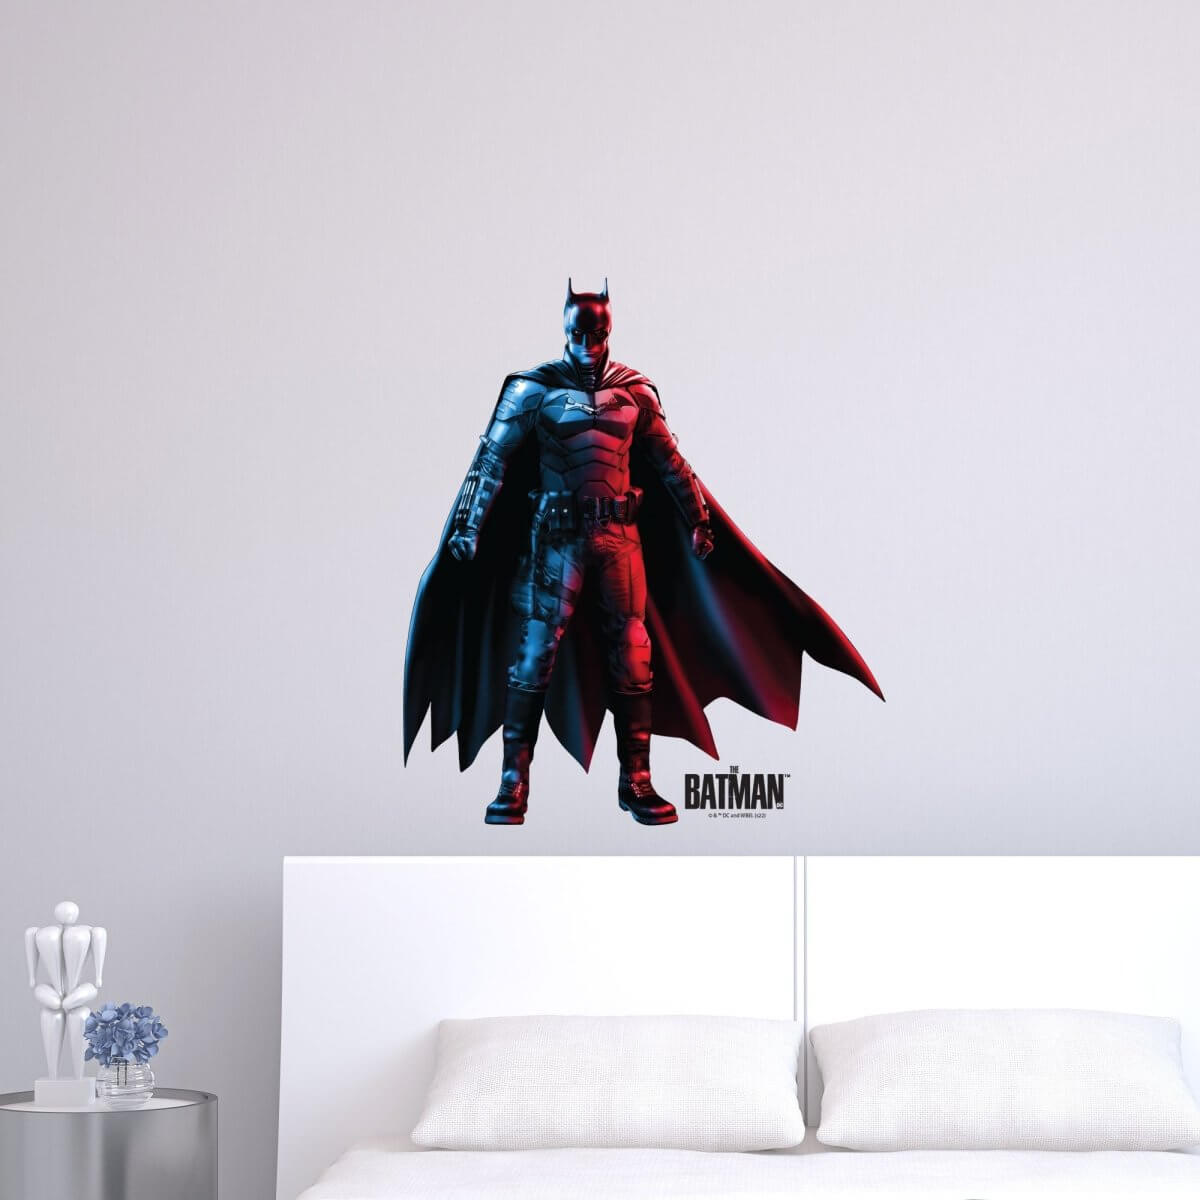 Kismet Decals The Batman 2022 in Combat Armor Neon Licensed Wall Sticker - Easy DIY Home & Kids Room Decor Wall Decal Art - Kismet Decals